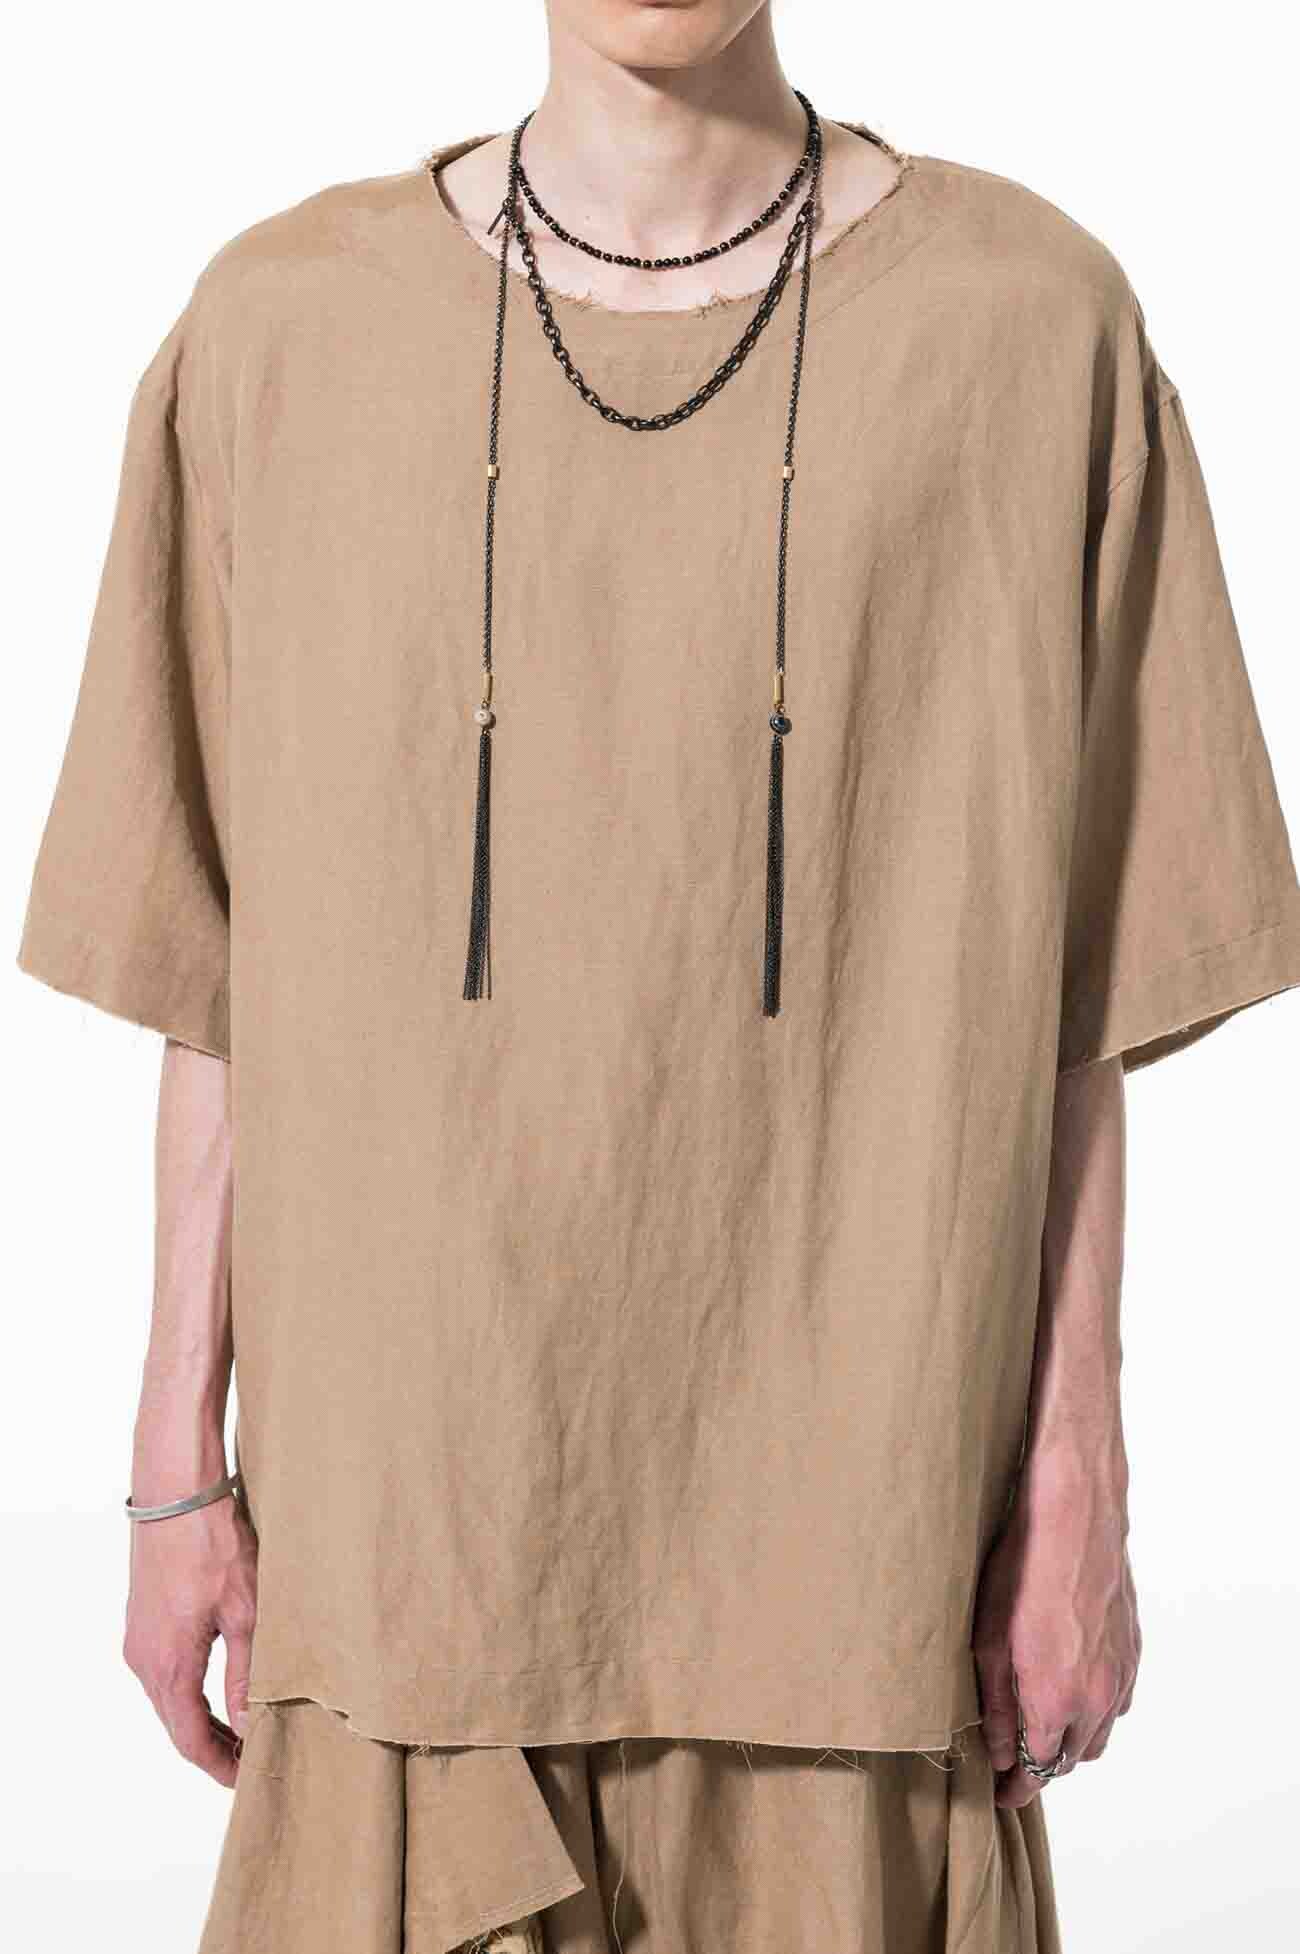 Ry/Li Easy Cross Crew neck shirt pullover